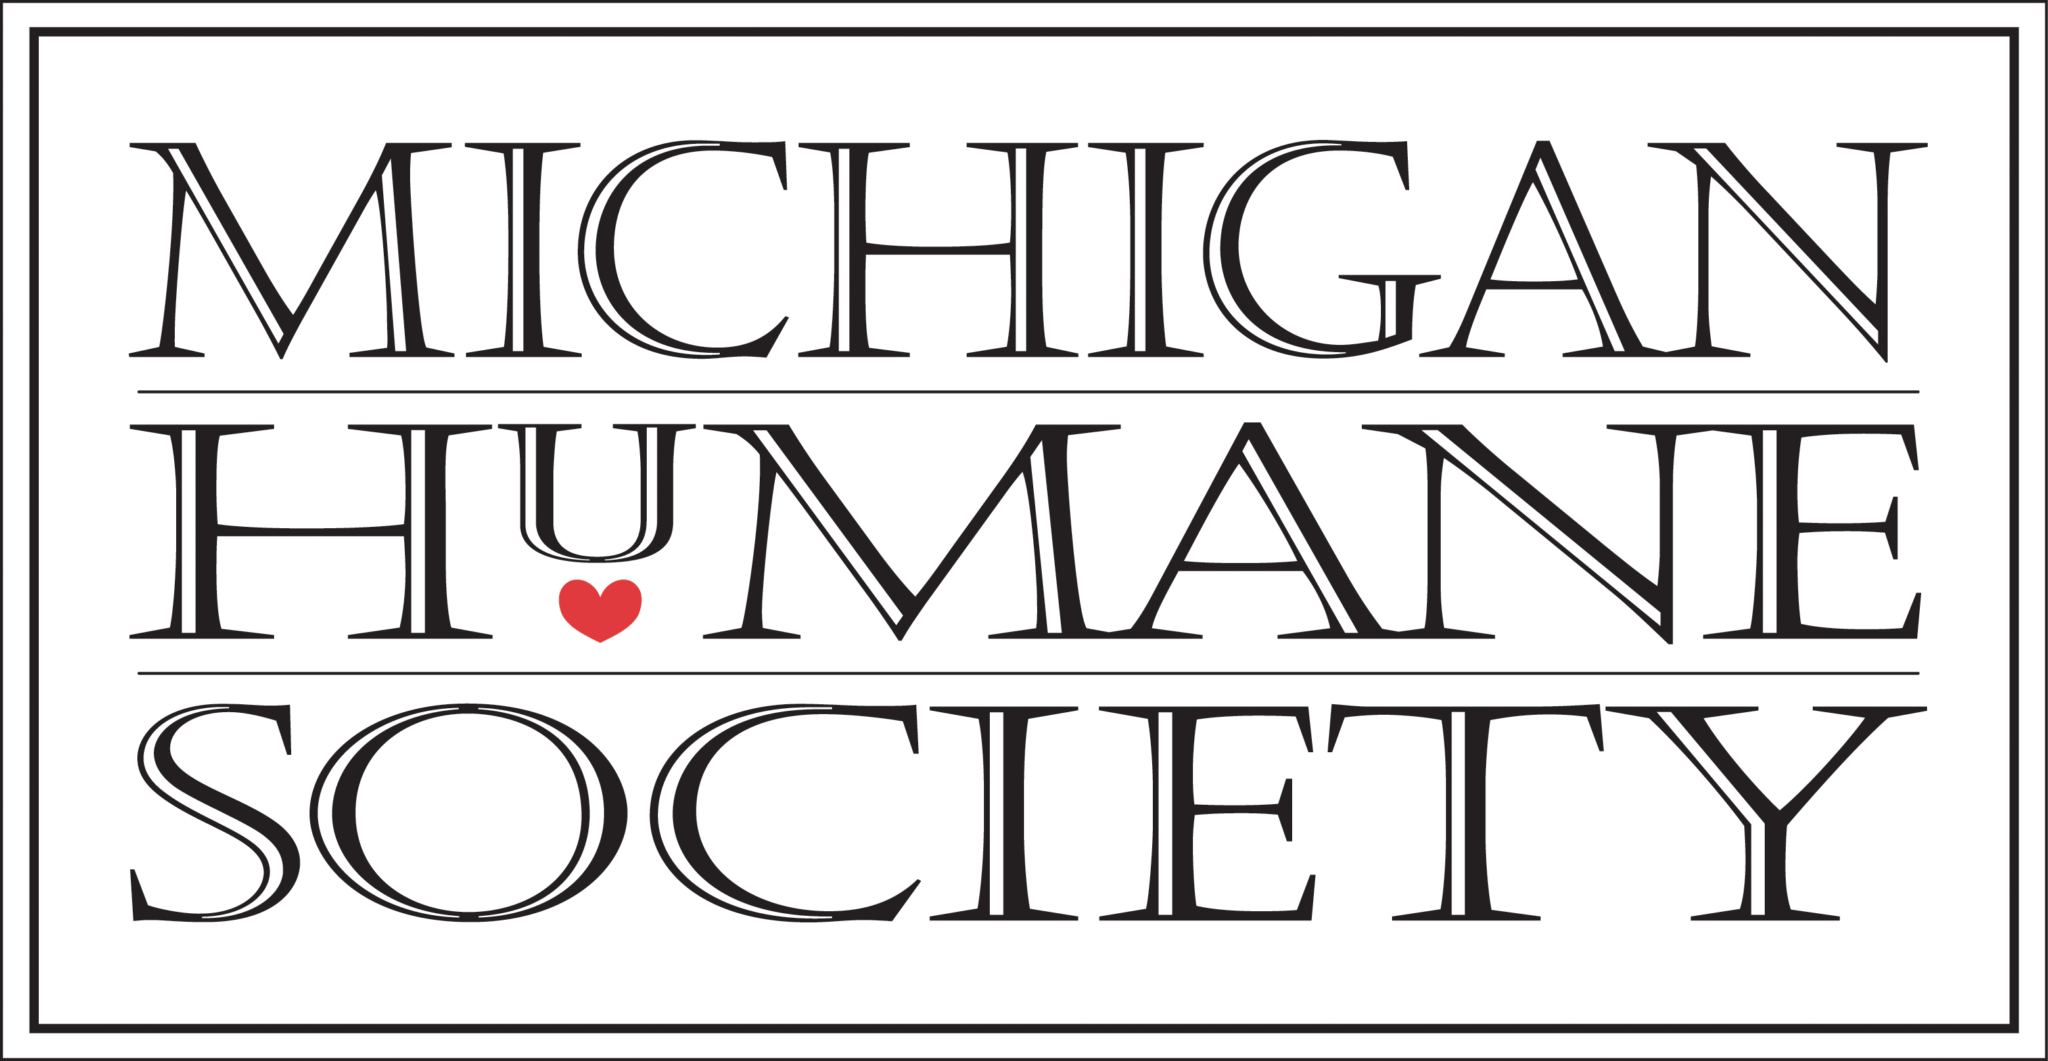 Michigan humane society centene ncchca partnership